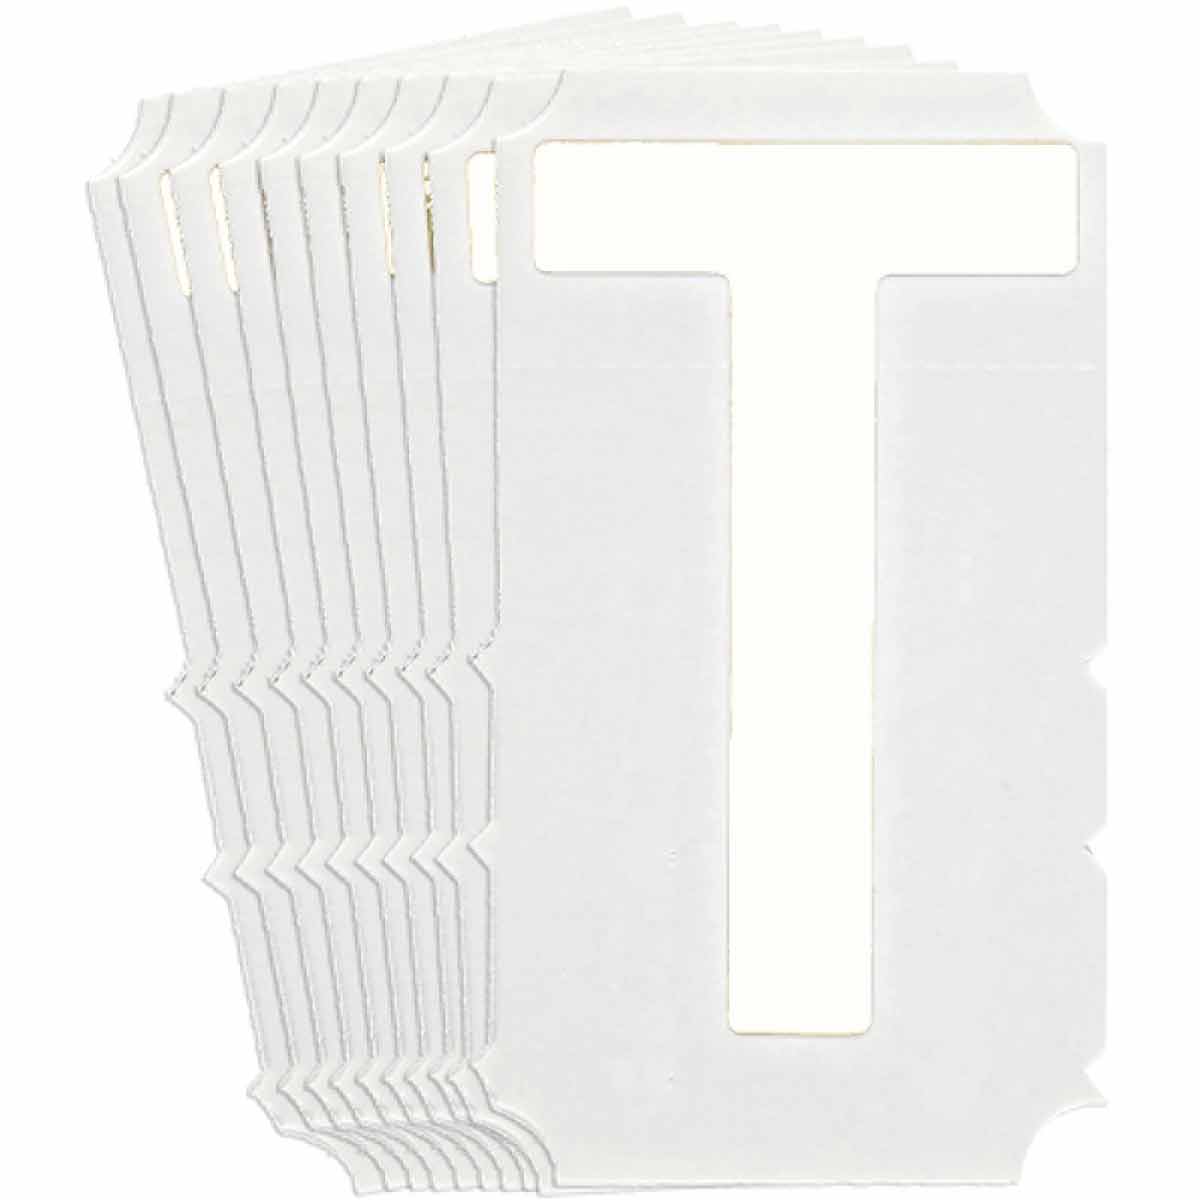 6 Height Legend T Quik-Align Labels 10 per Package 10 per Package Brady 5210-T 6 Height Legend T White 